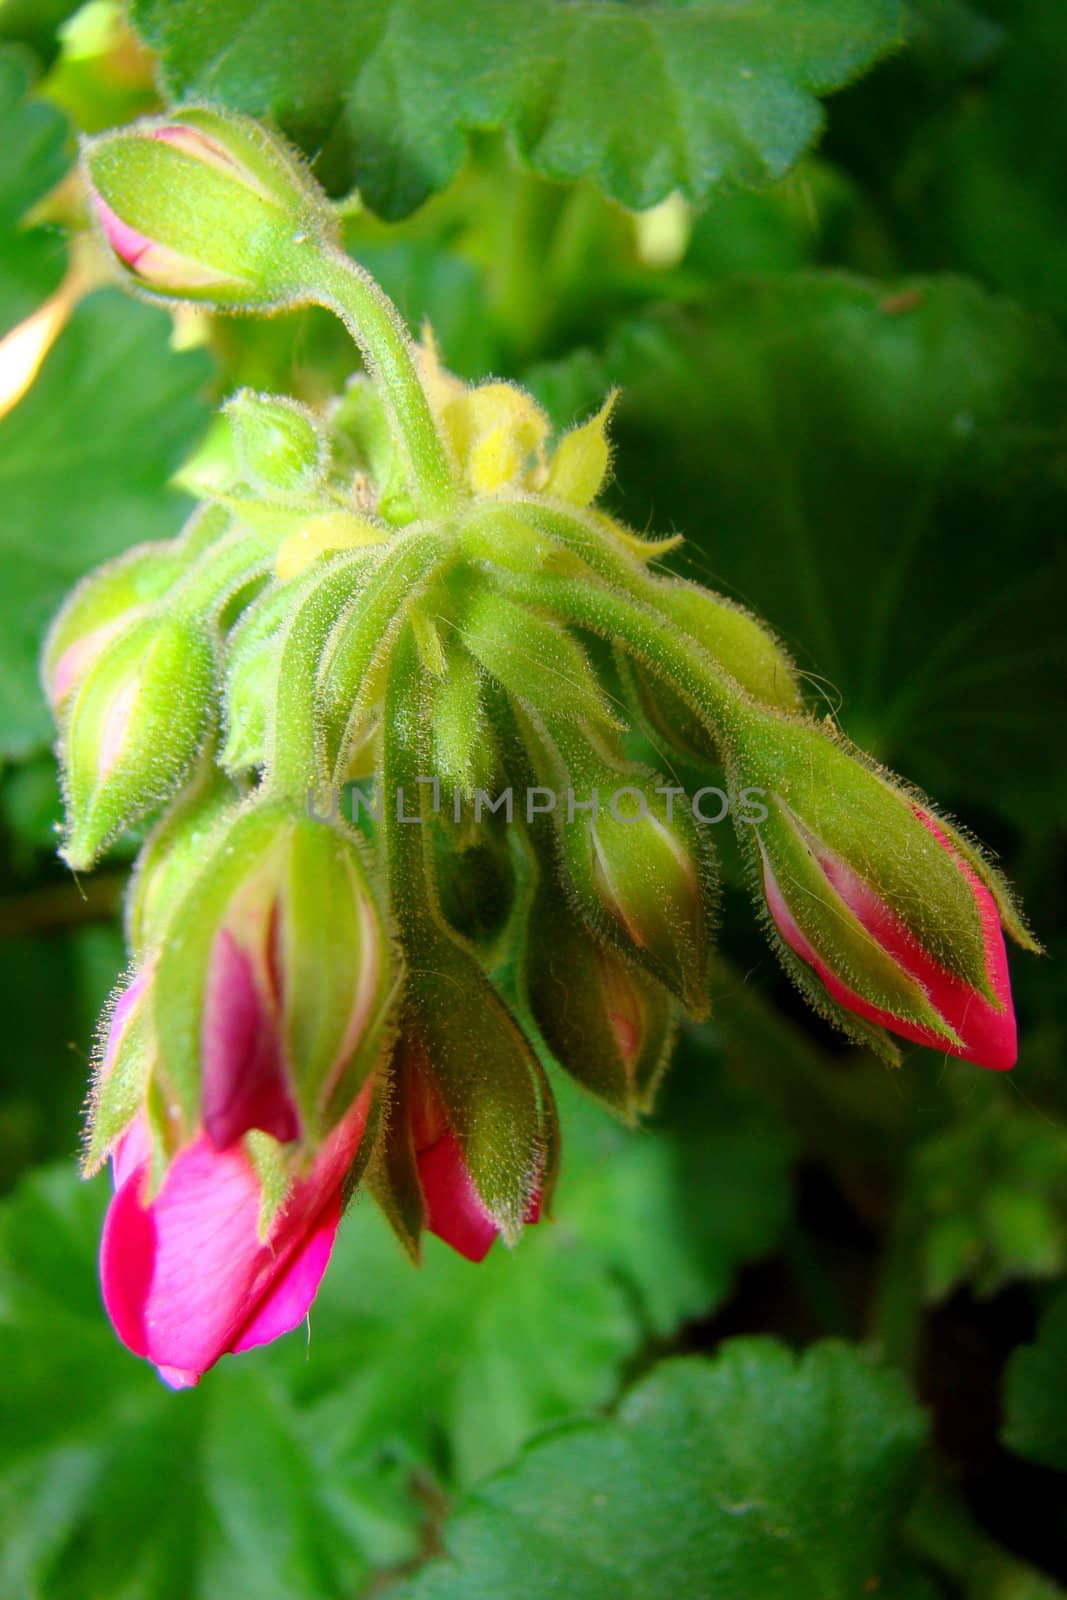 geranium buds by elvira334